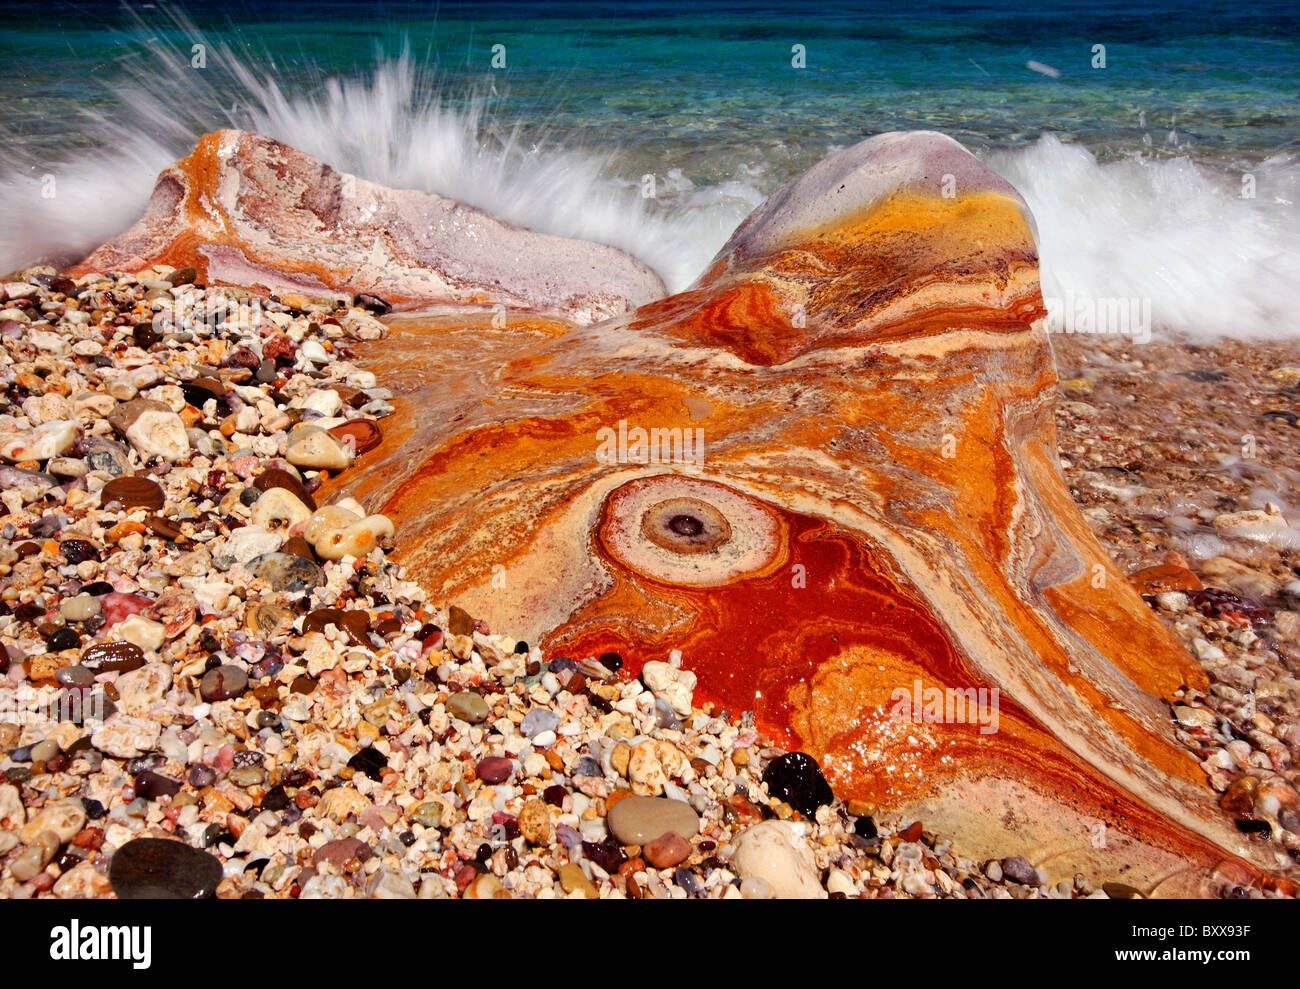 A 'psychedelic' volcanic rock in Kastanas beach, Milos island, Greece Stock Photo